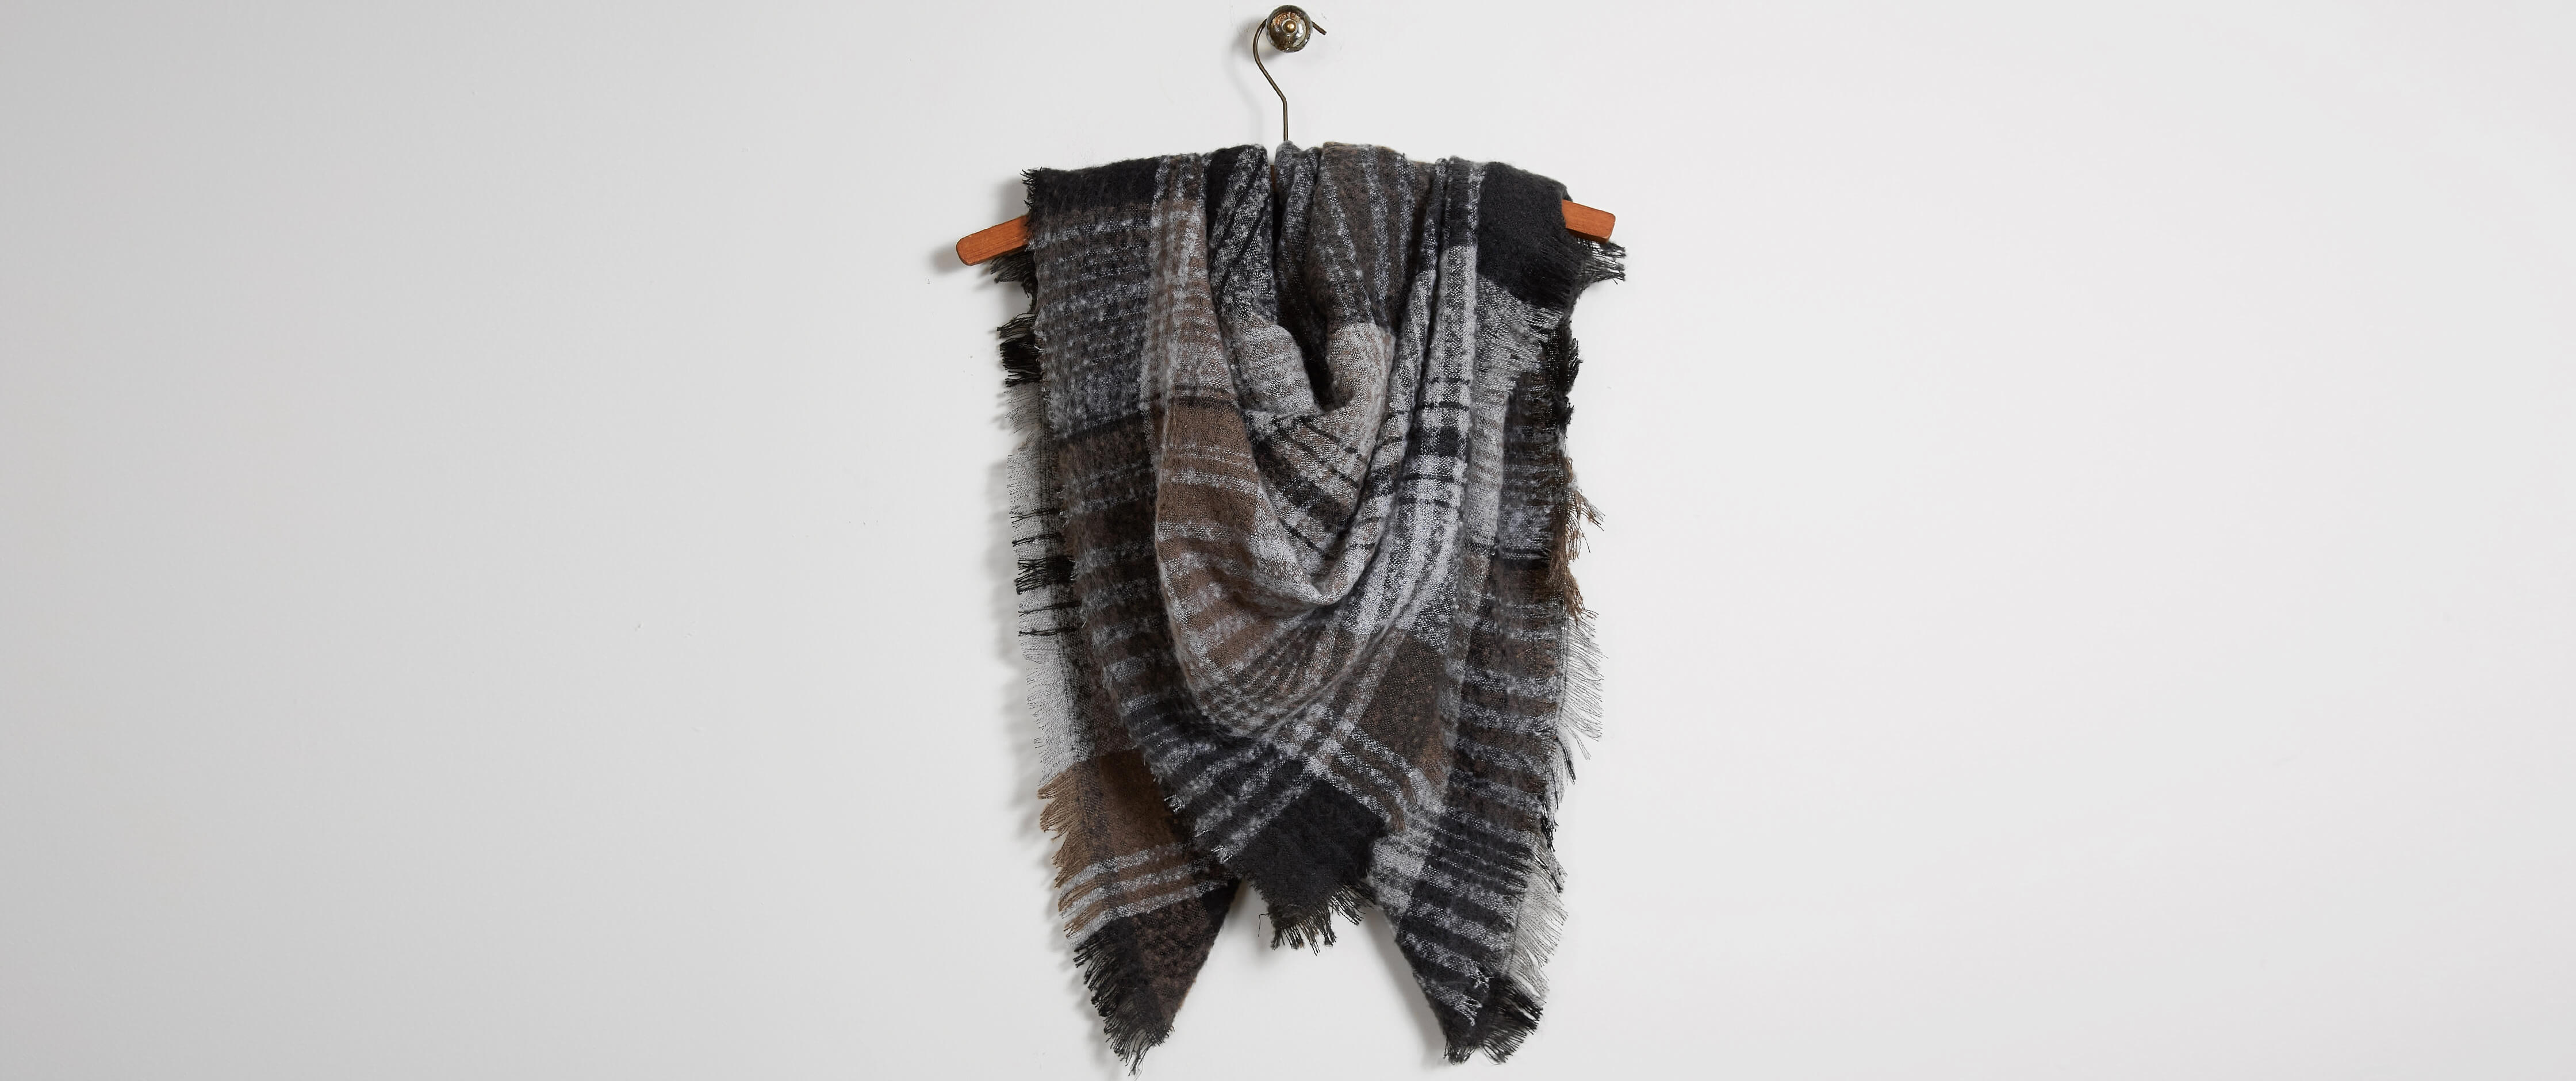 black and brown blanket scarf